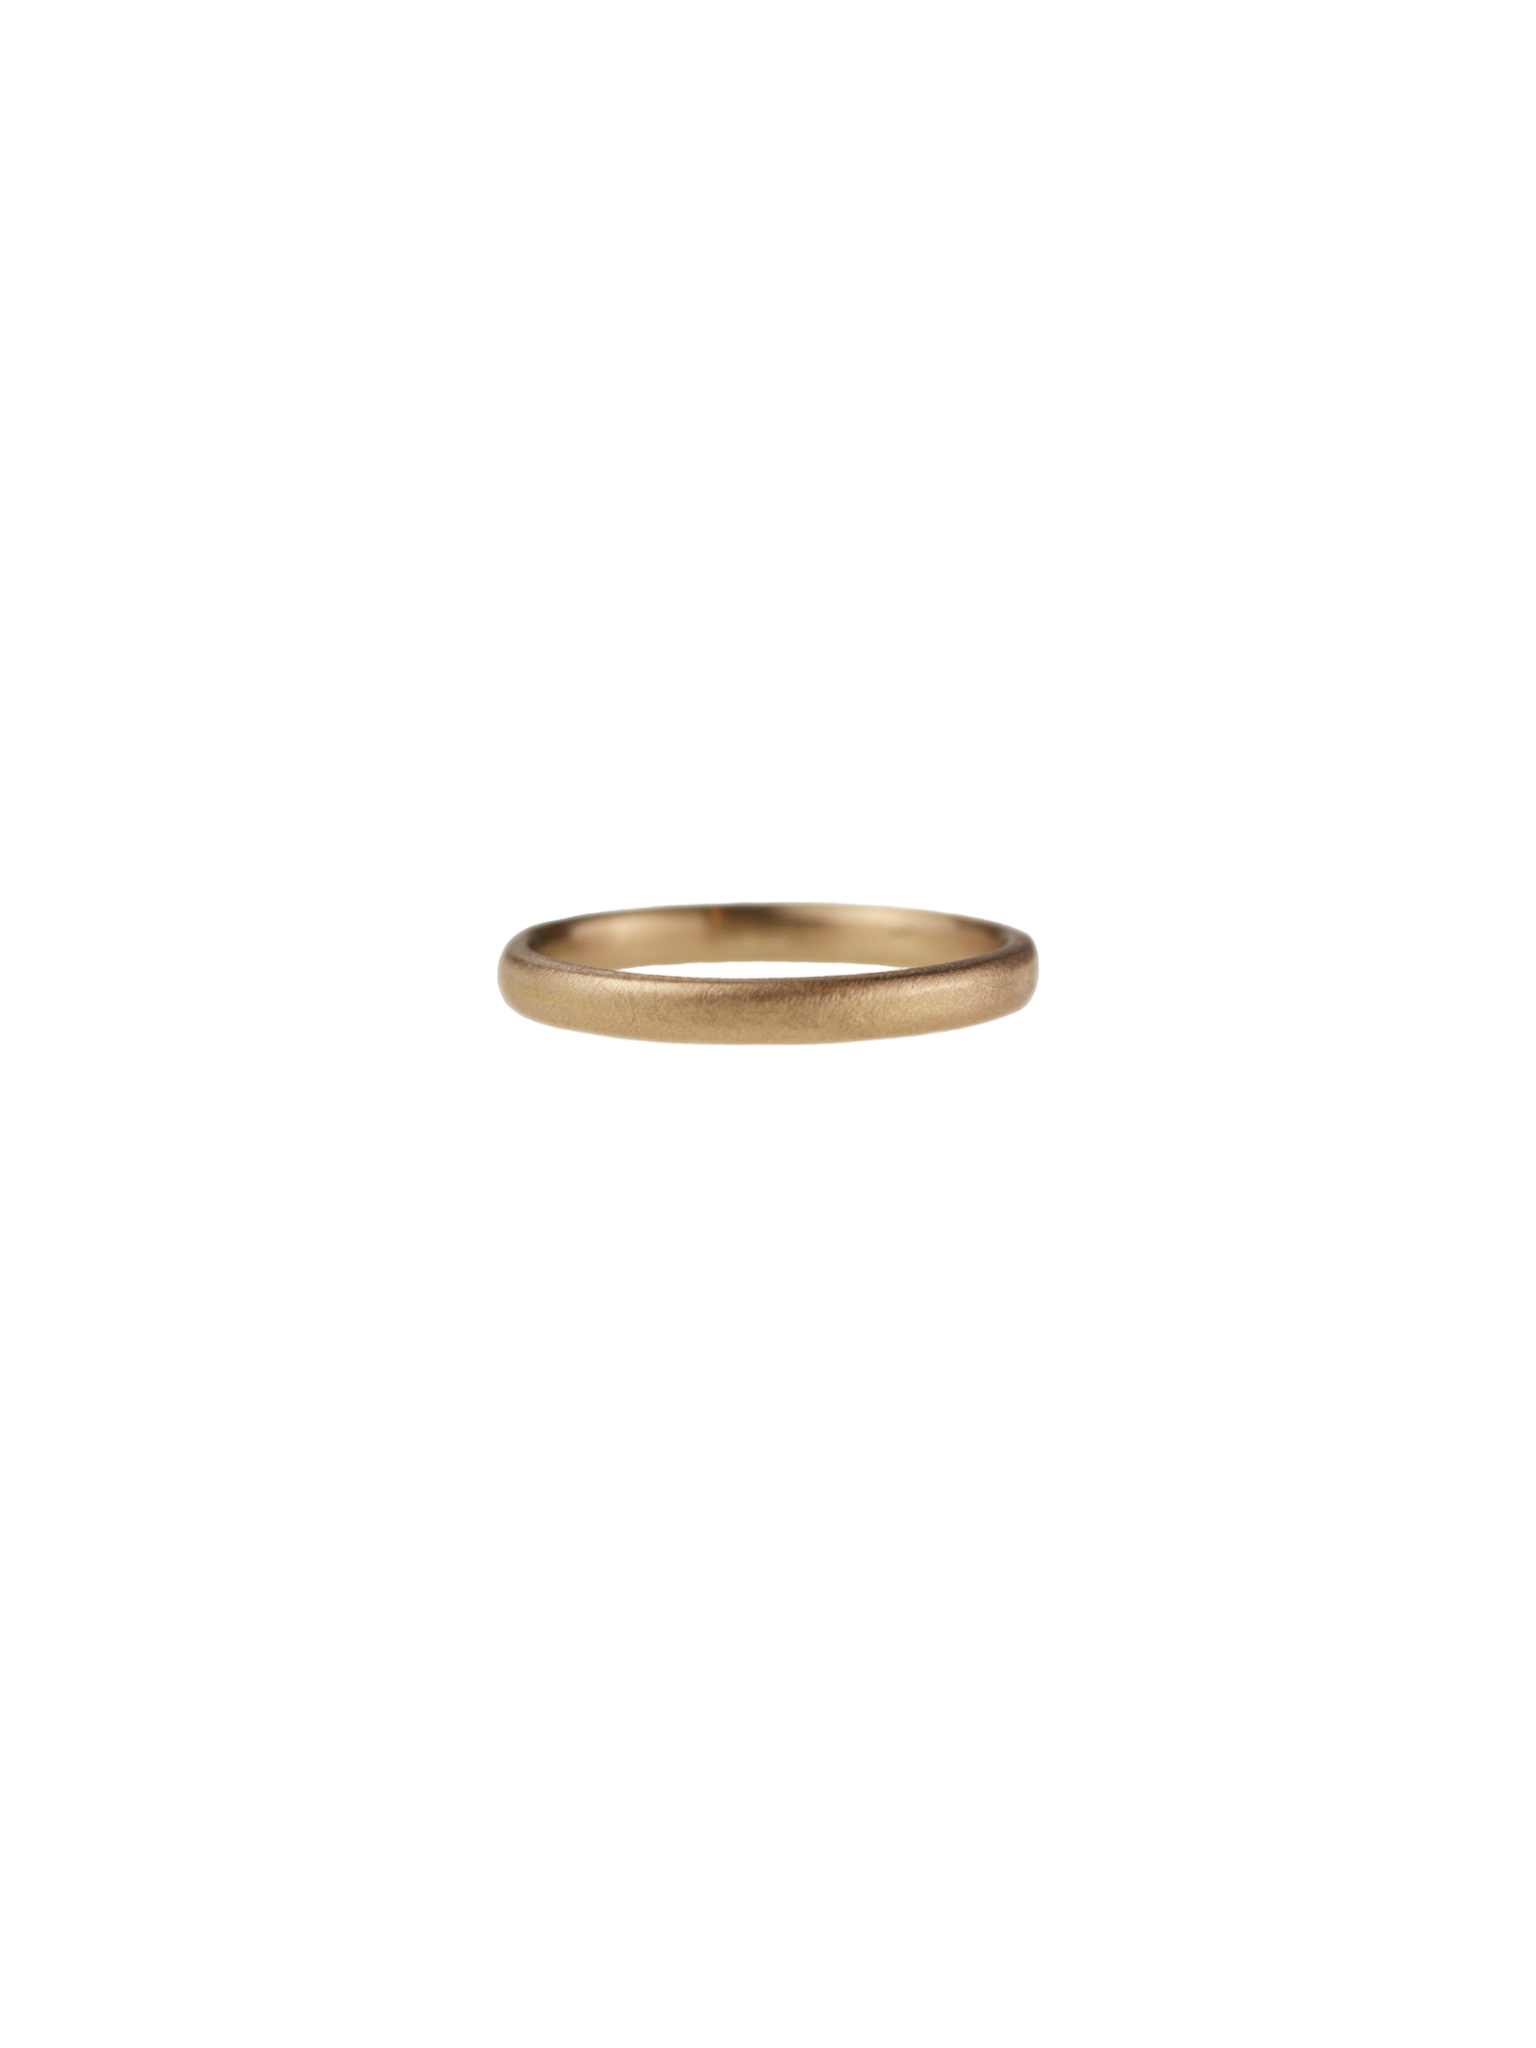 Slim oval wedding ring